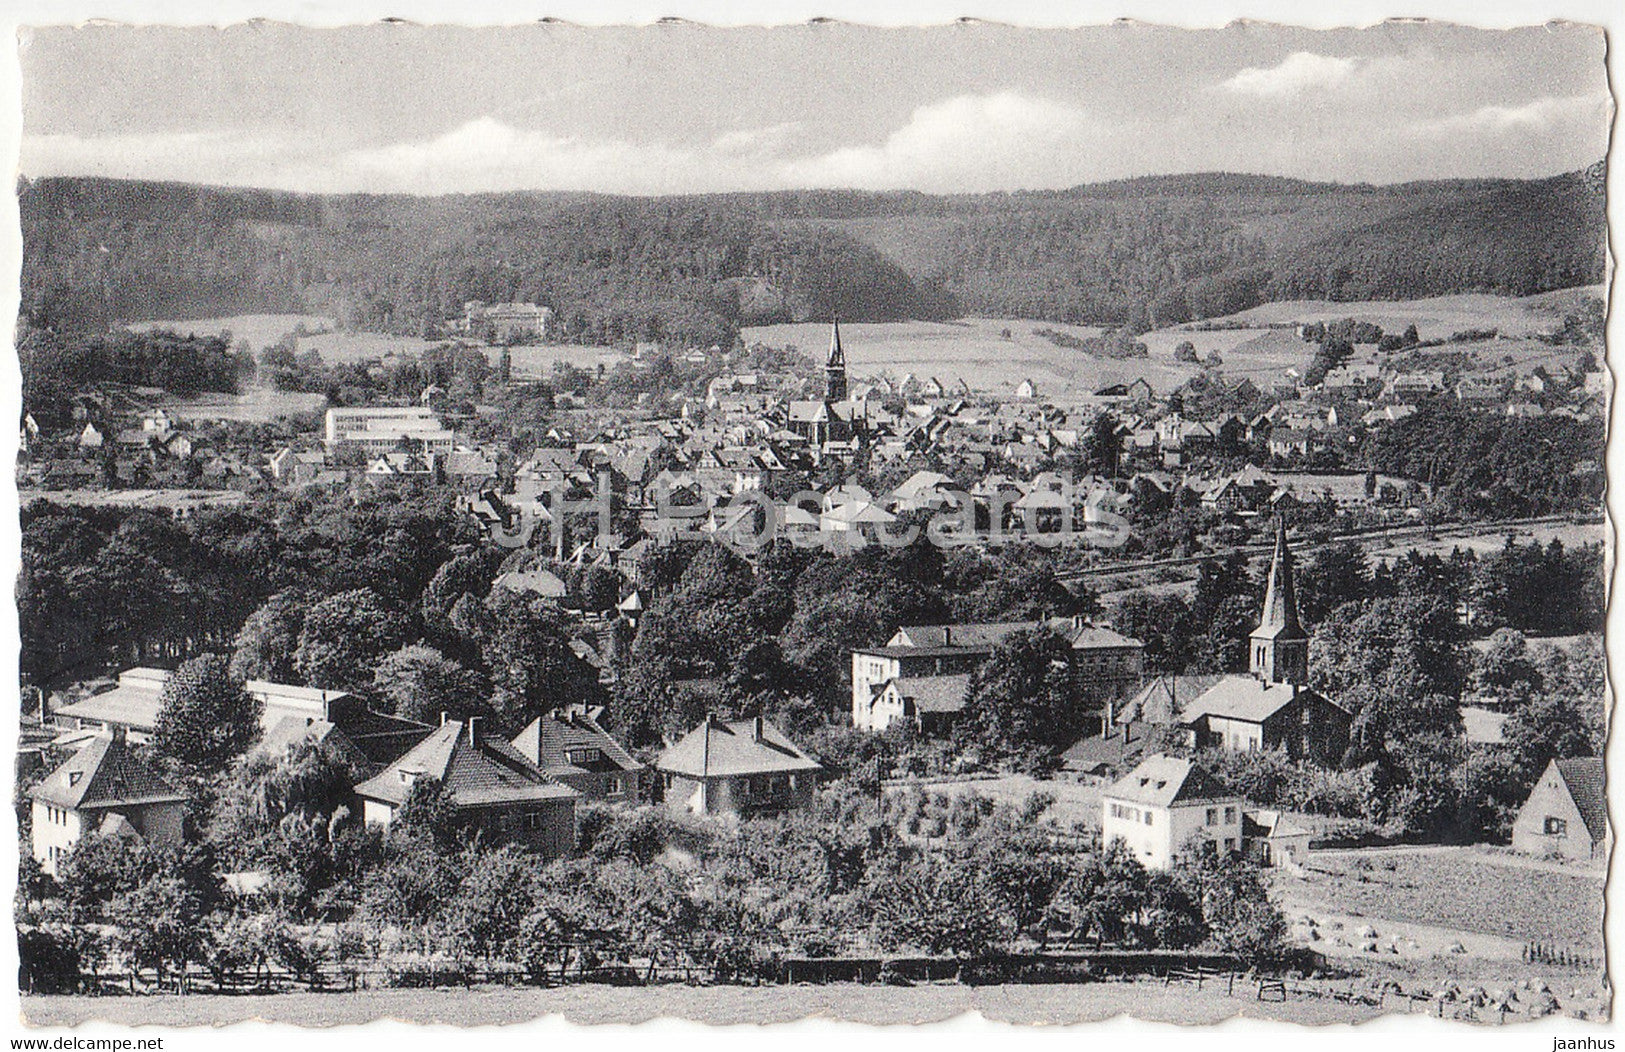 Bad Driburg - Blick vom Steinberg - old postcard - 1956 - Germany - used - JH Postcards